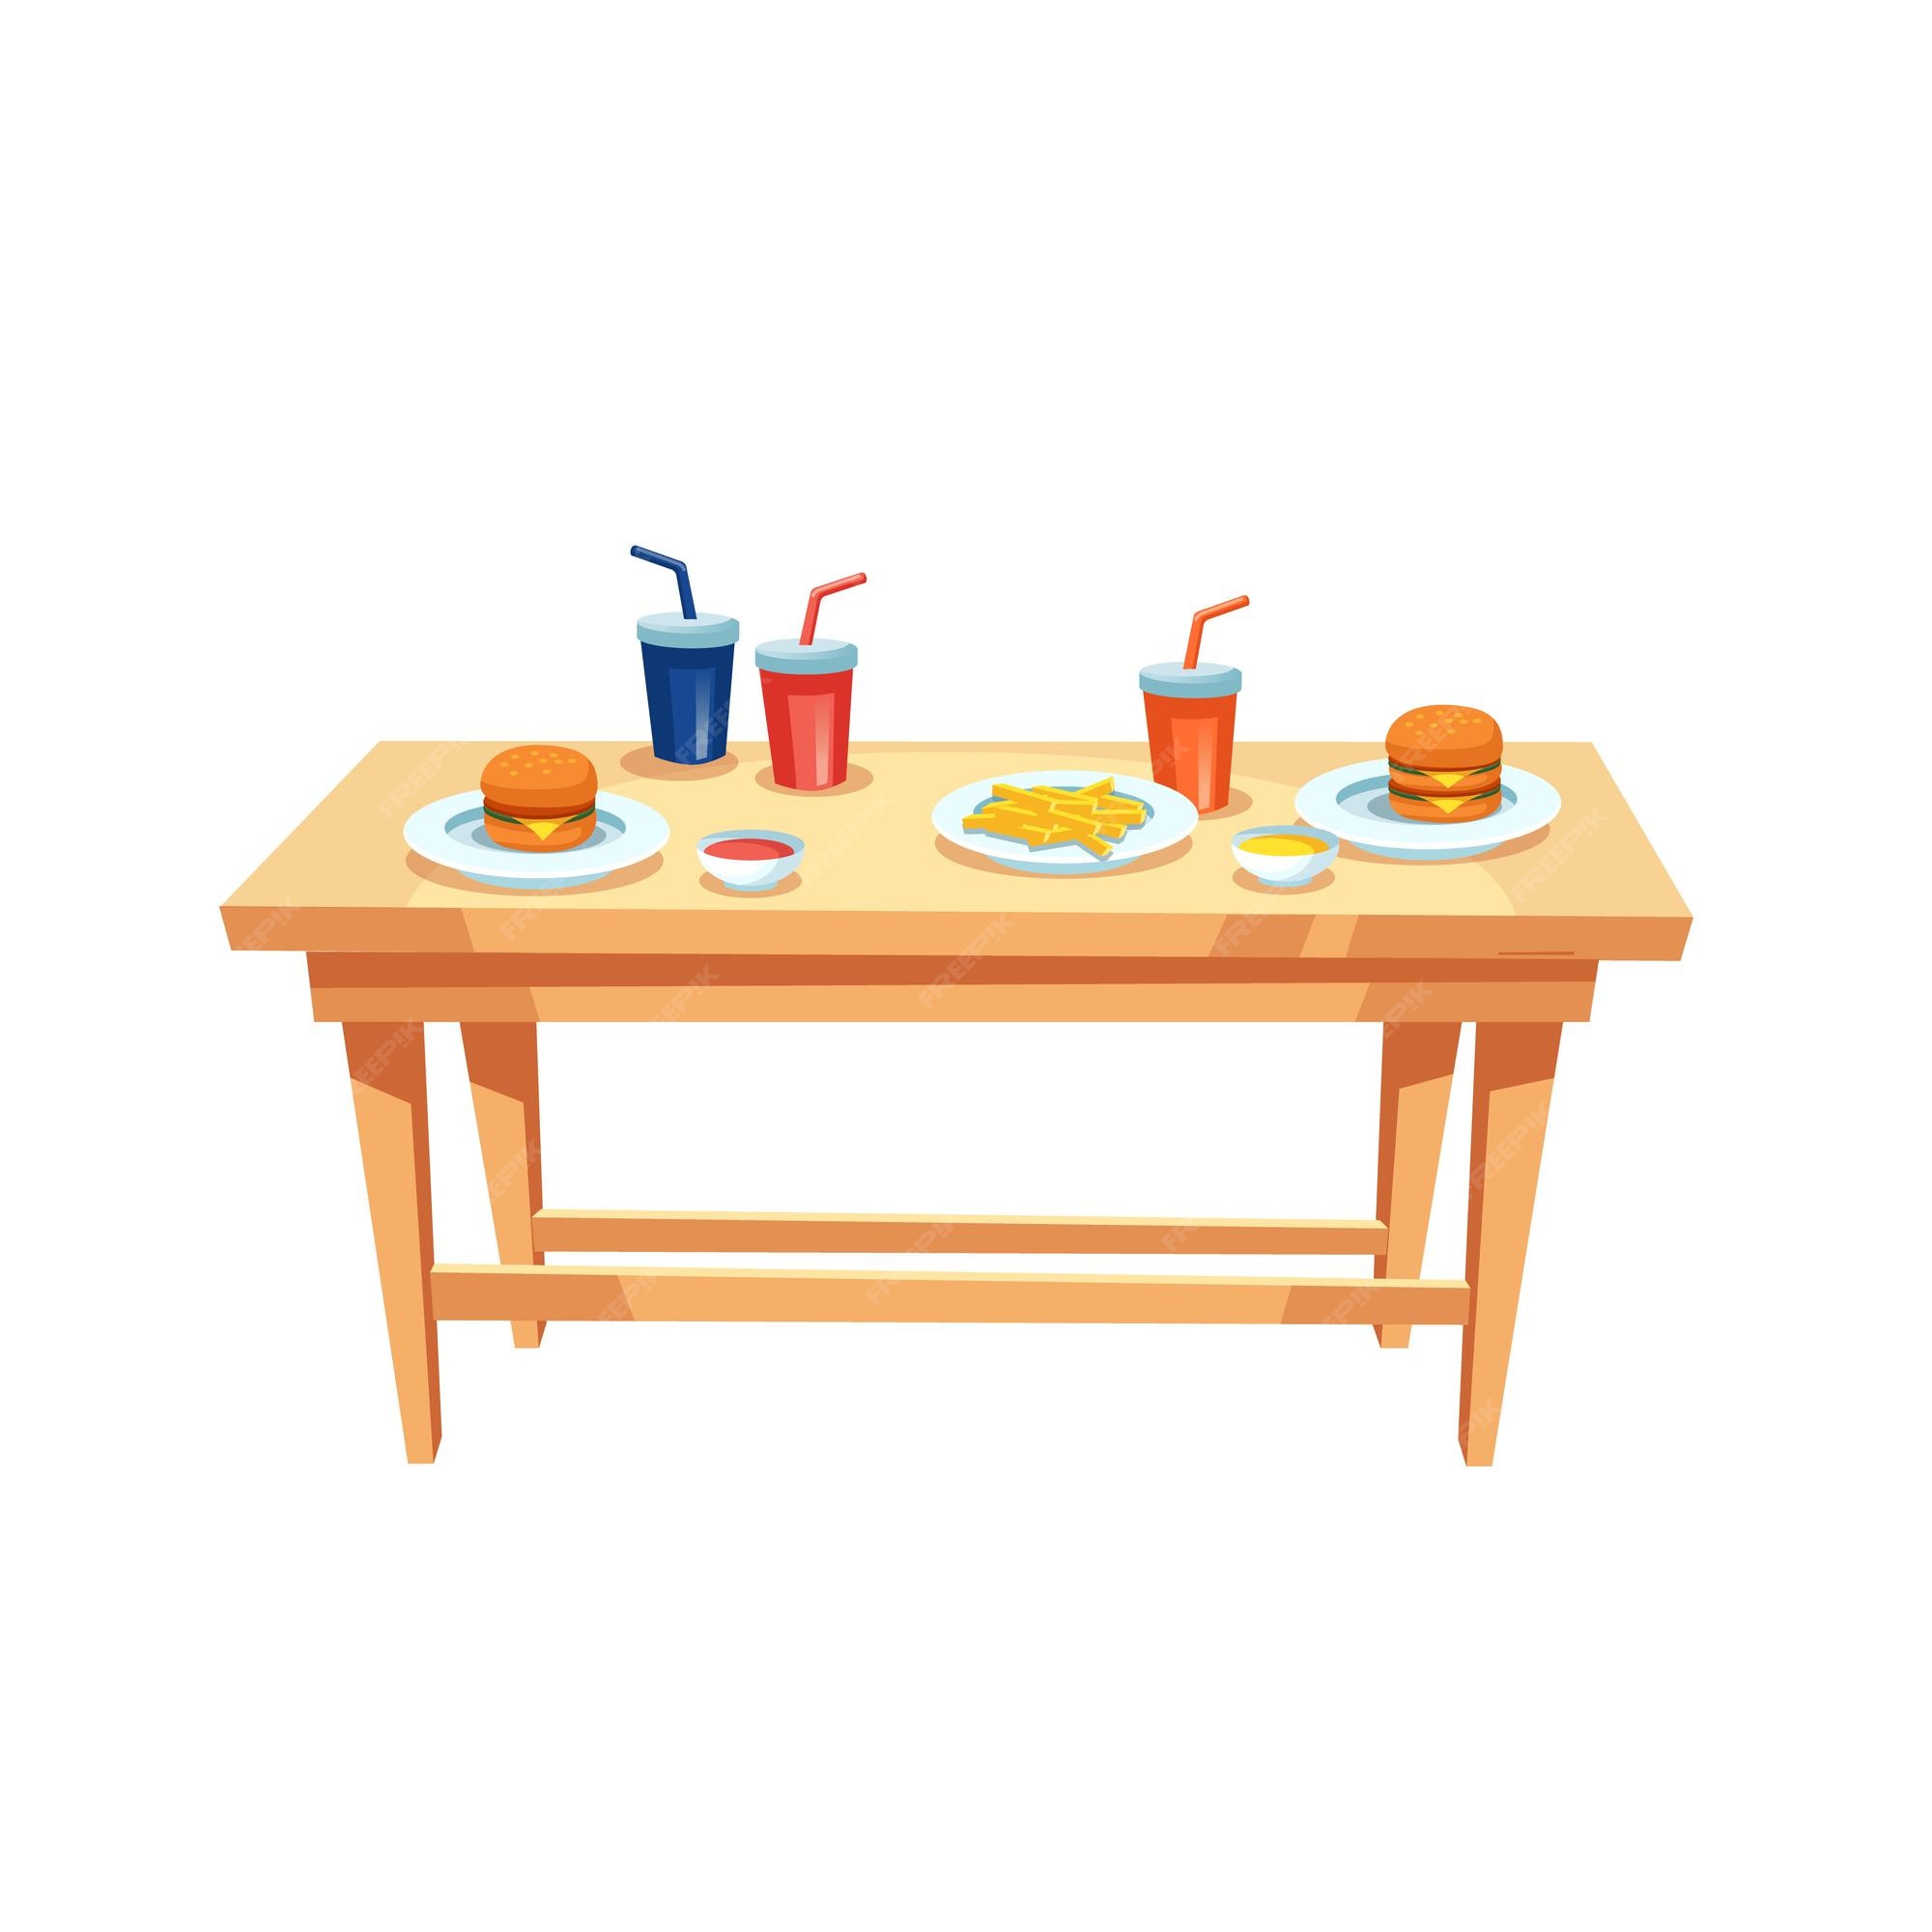 Snack table Vectors & Illustrations for Free Download | Freepik